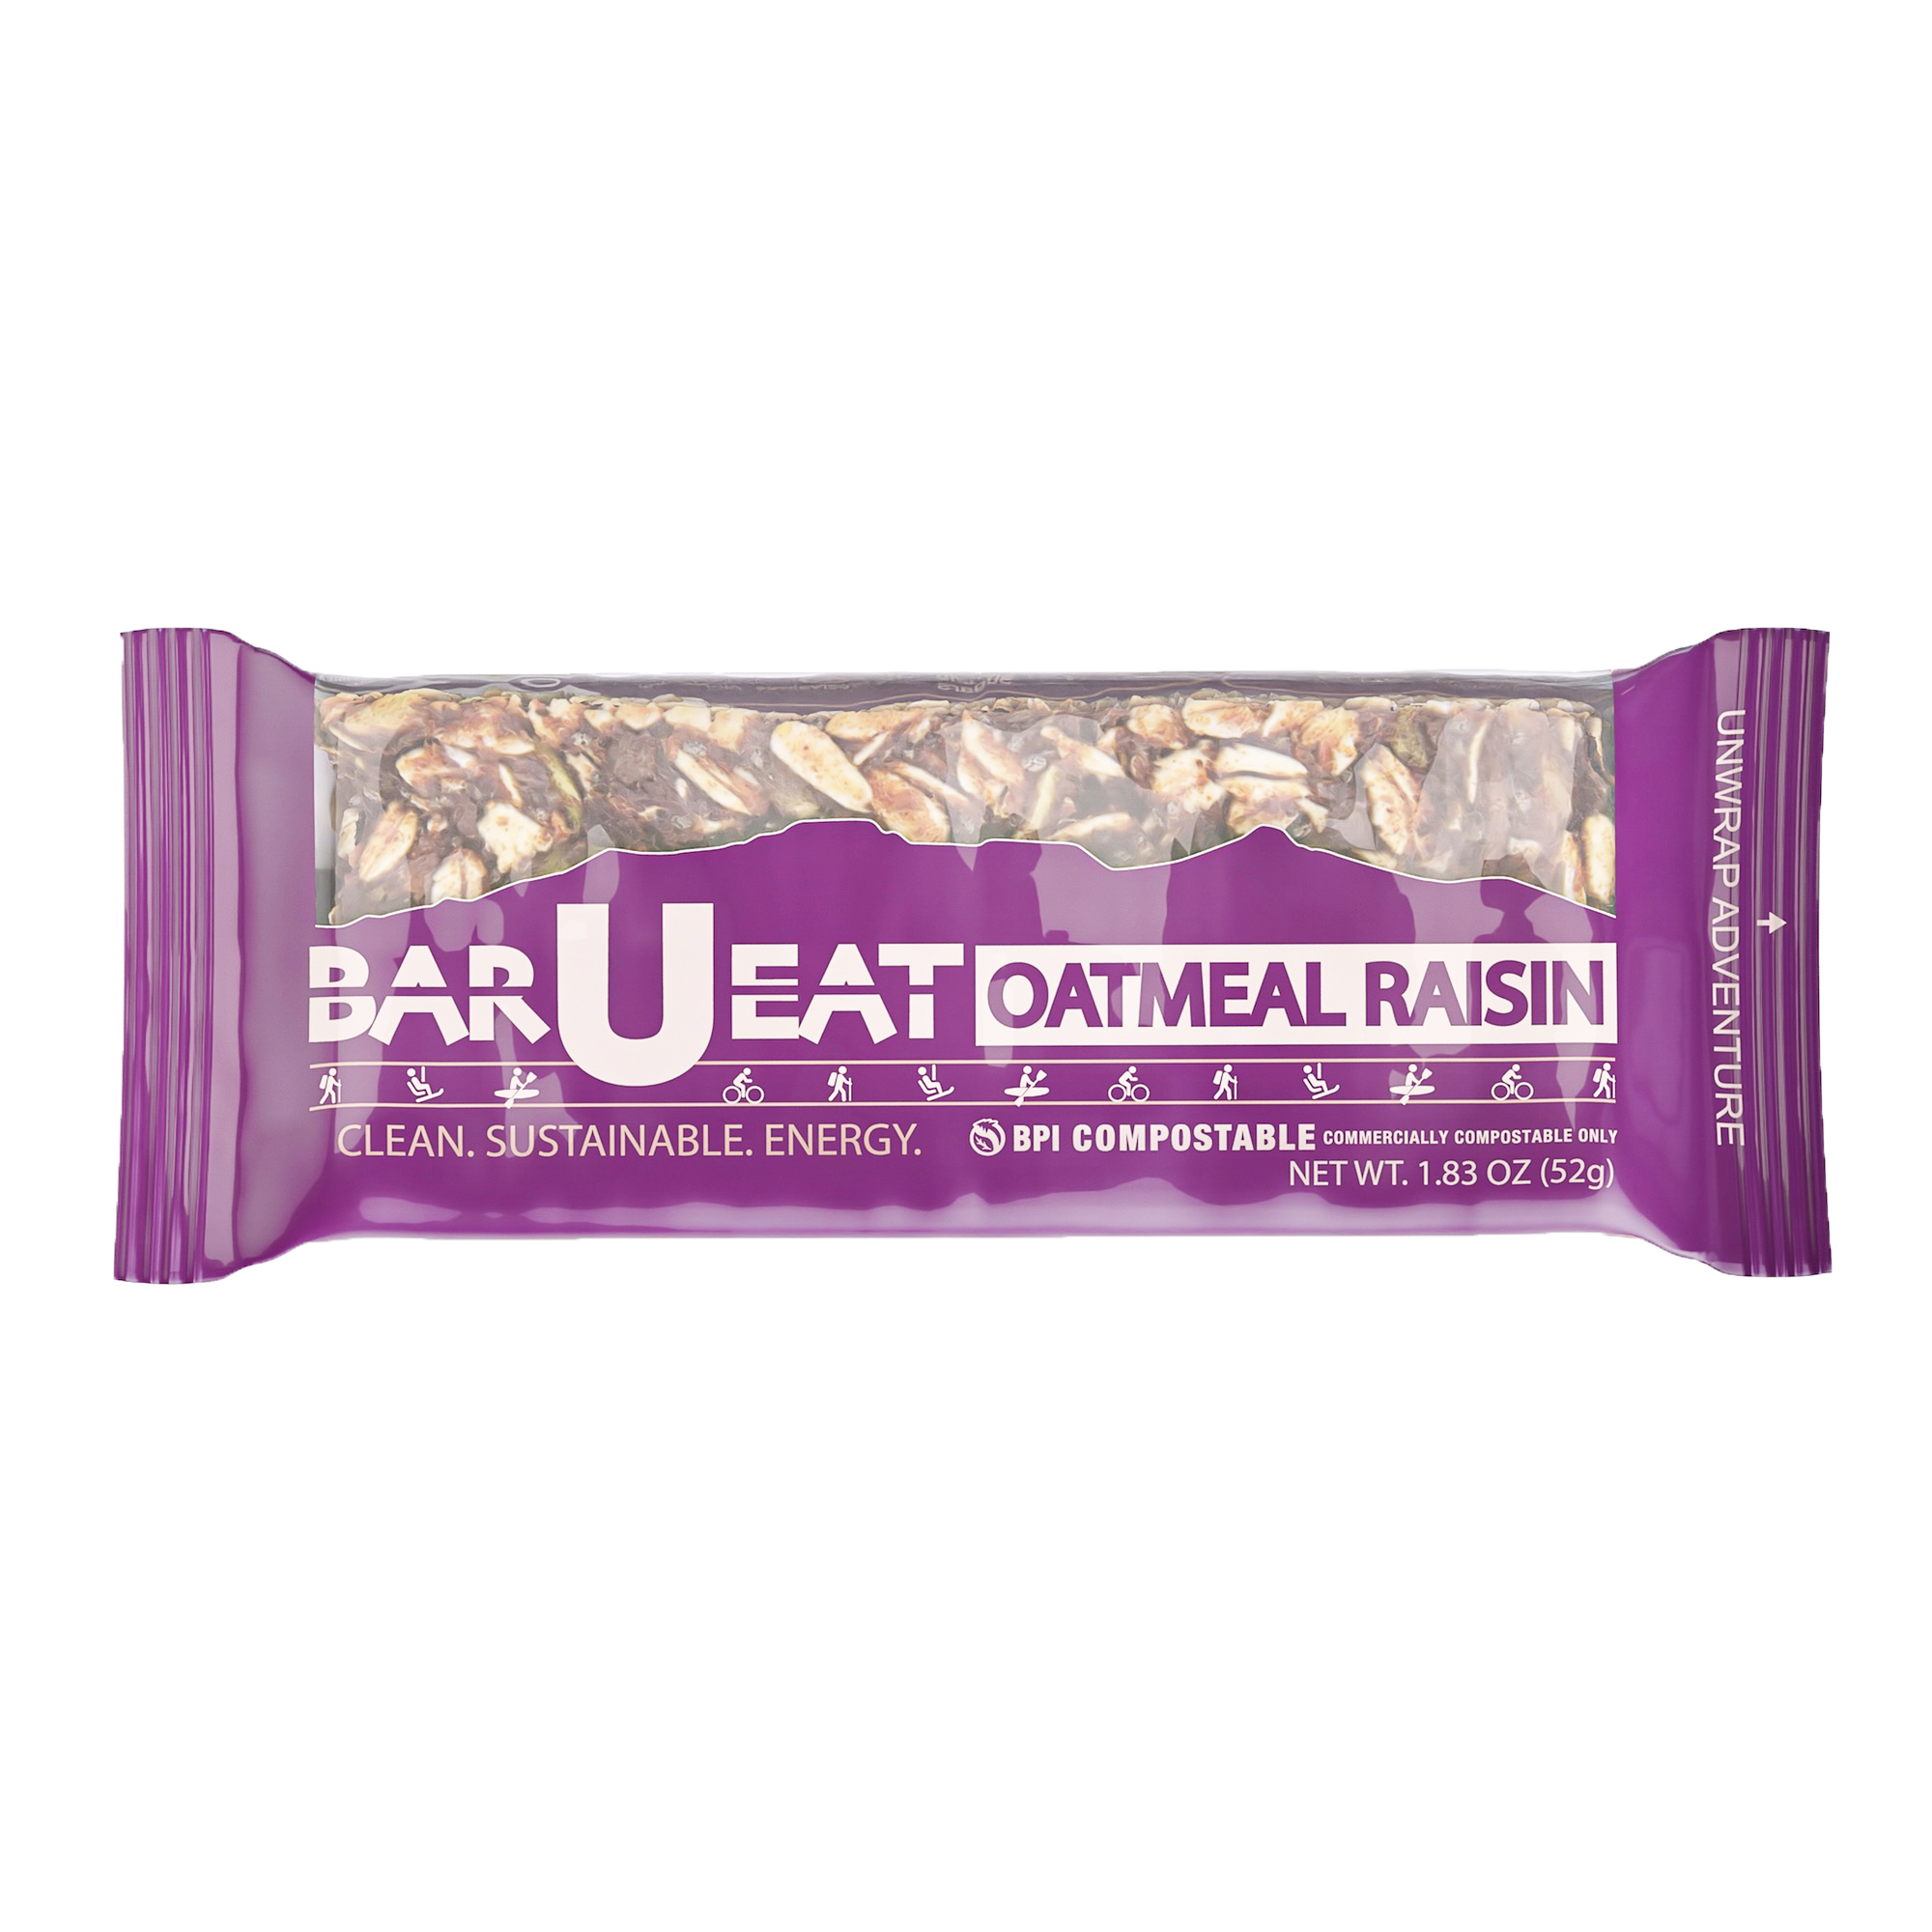 oatmeal raisin granola bar wrapper